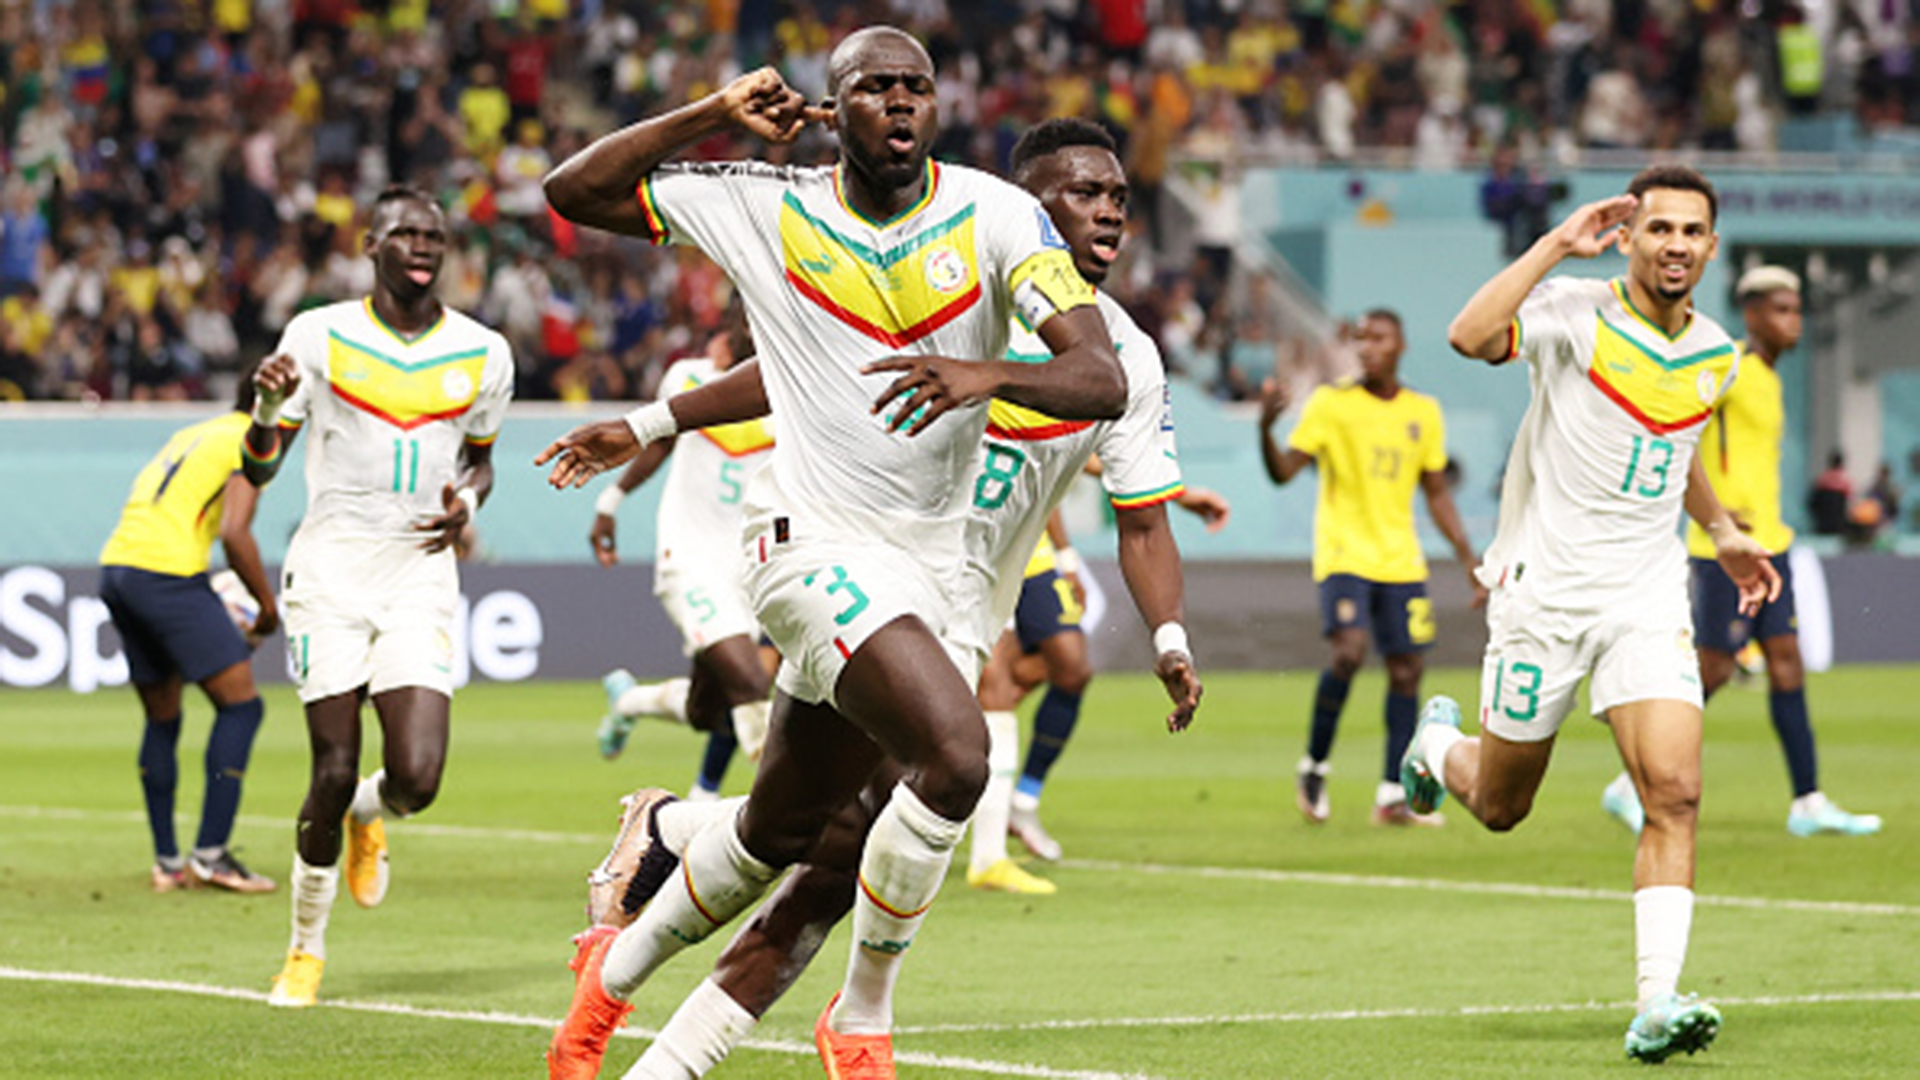 Must See: 'The perfect response!' - Senegal leapfrog Ecuador with Koulibaly's goal - Video - TSN